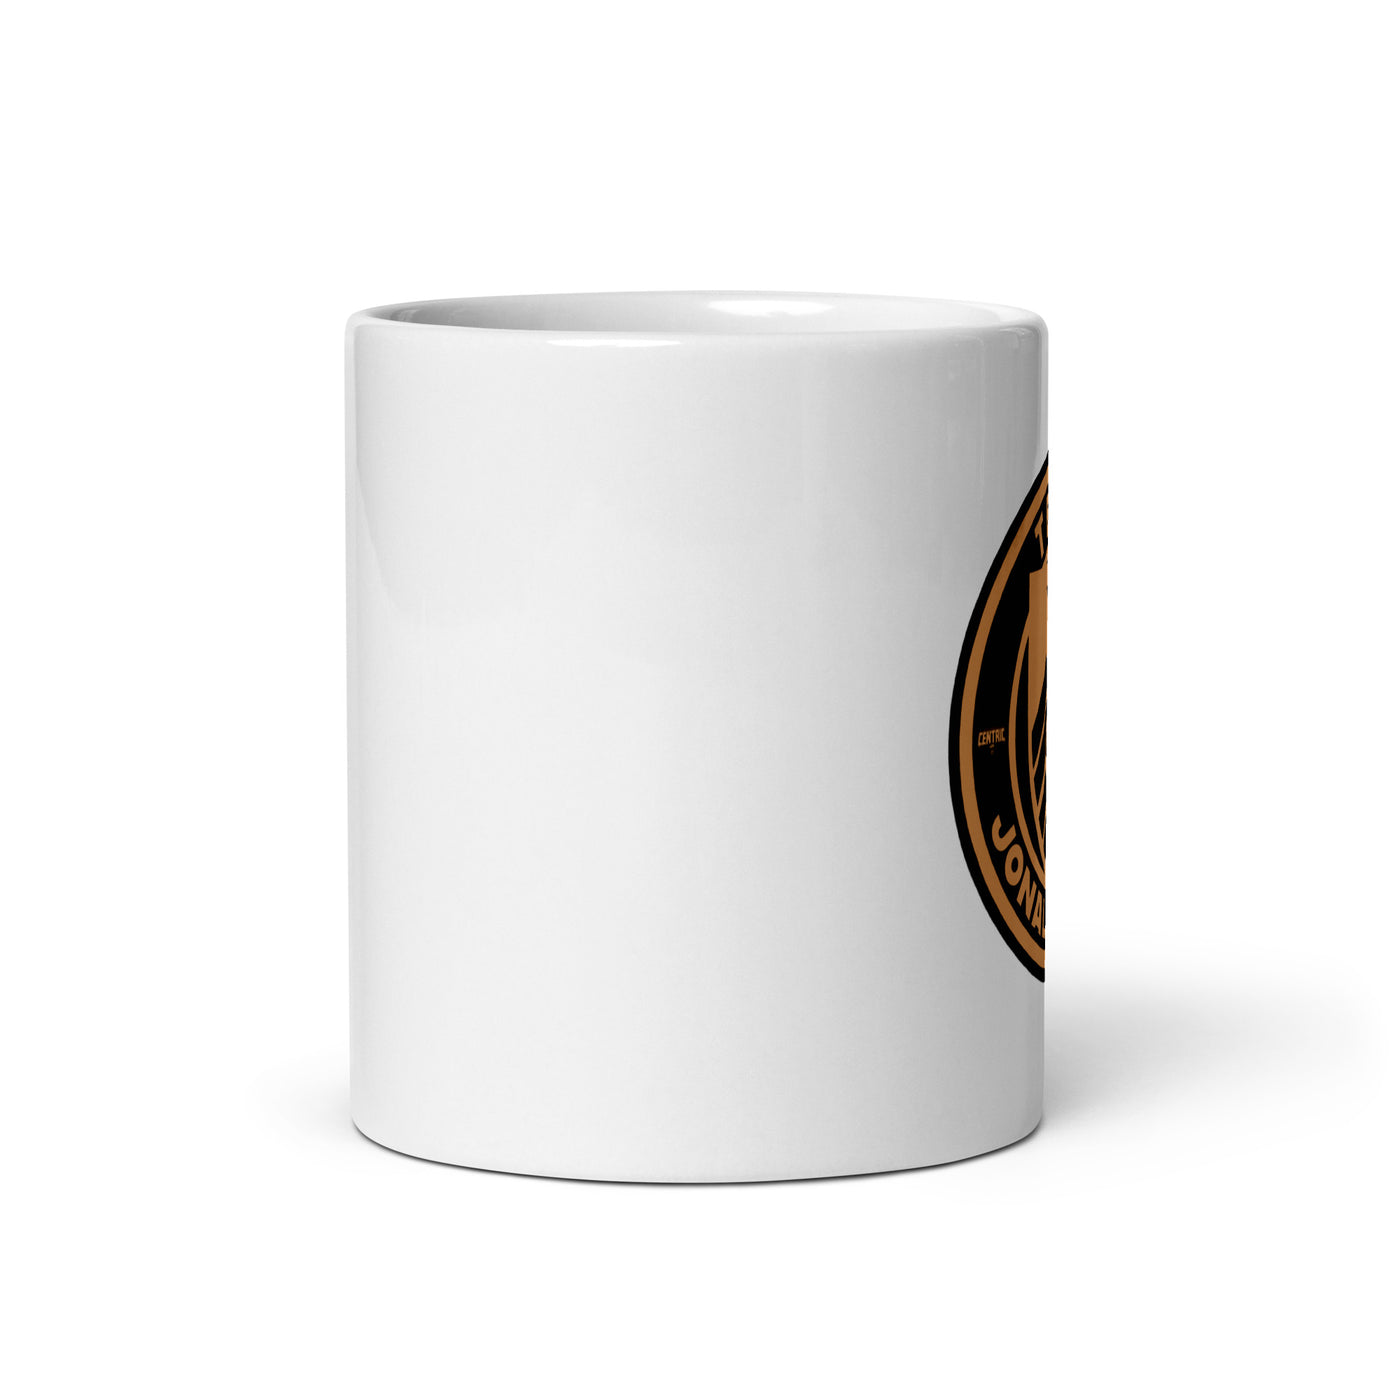 i2k White glossy mug